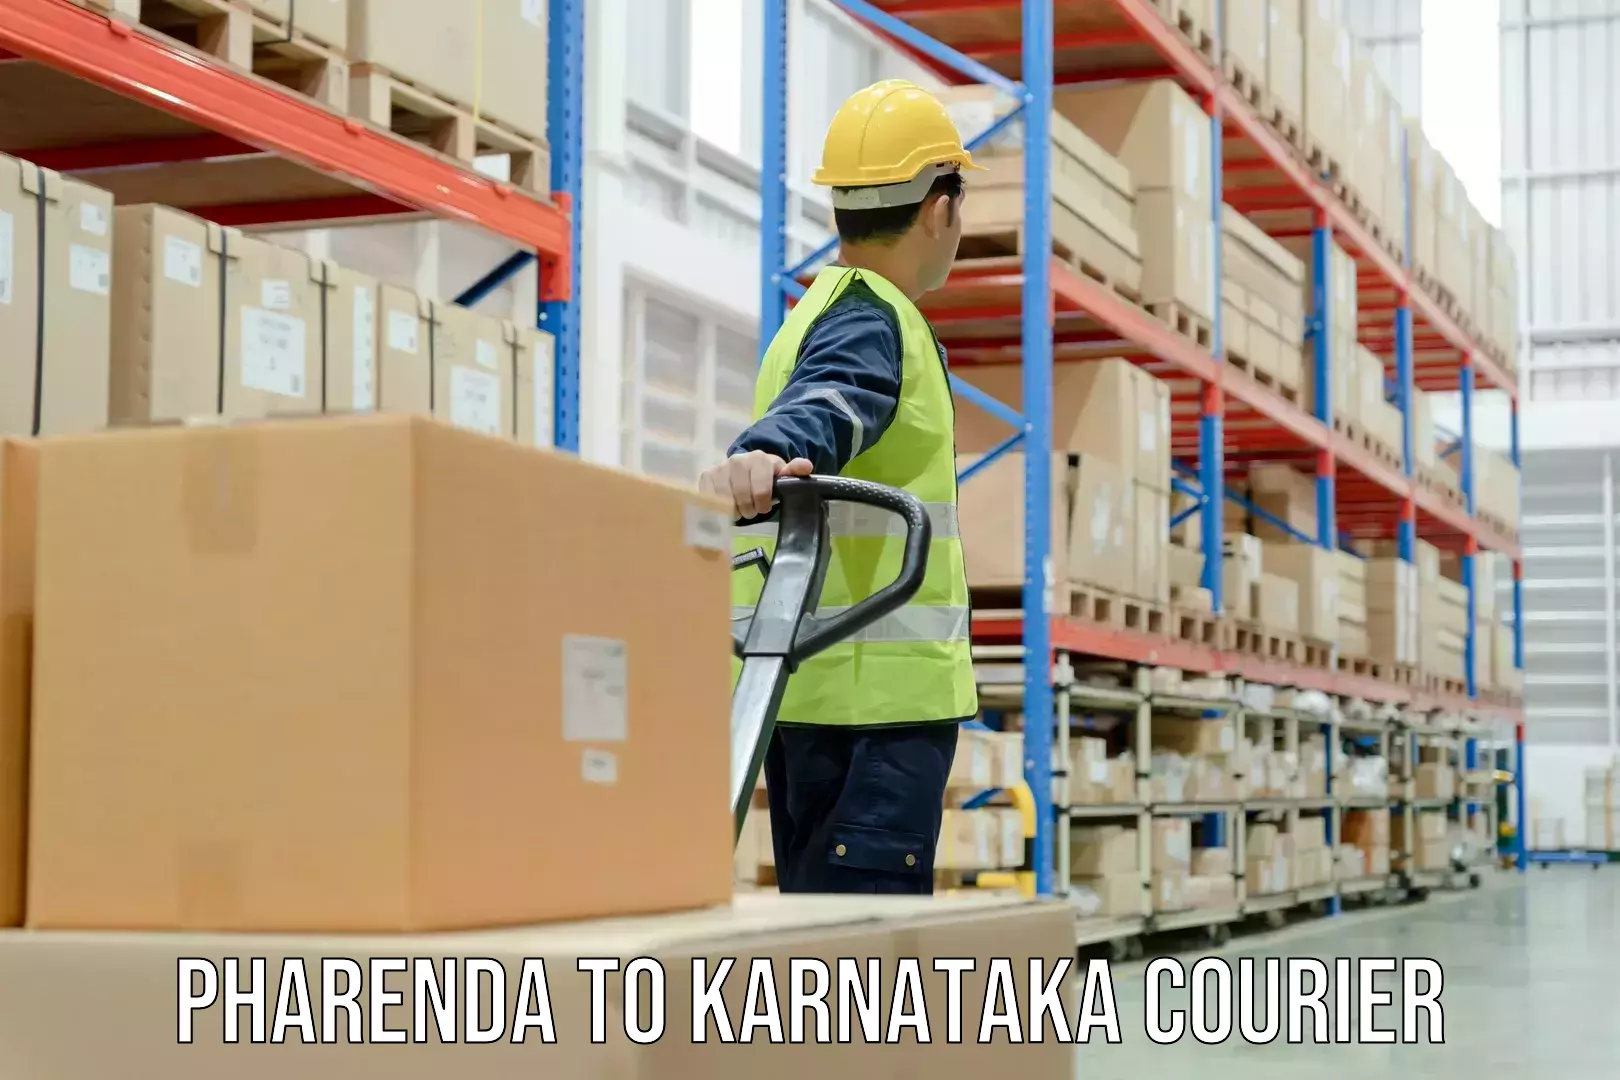 Courier service comparison in Pharenda to Karnataka